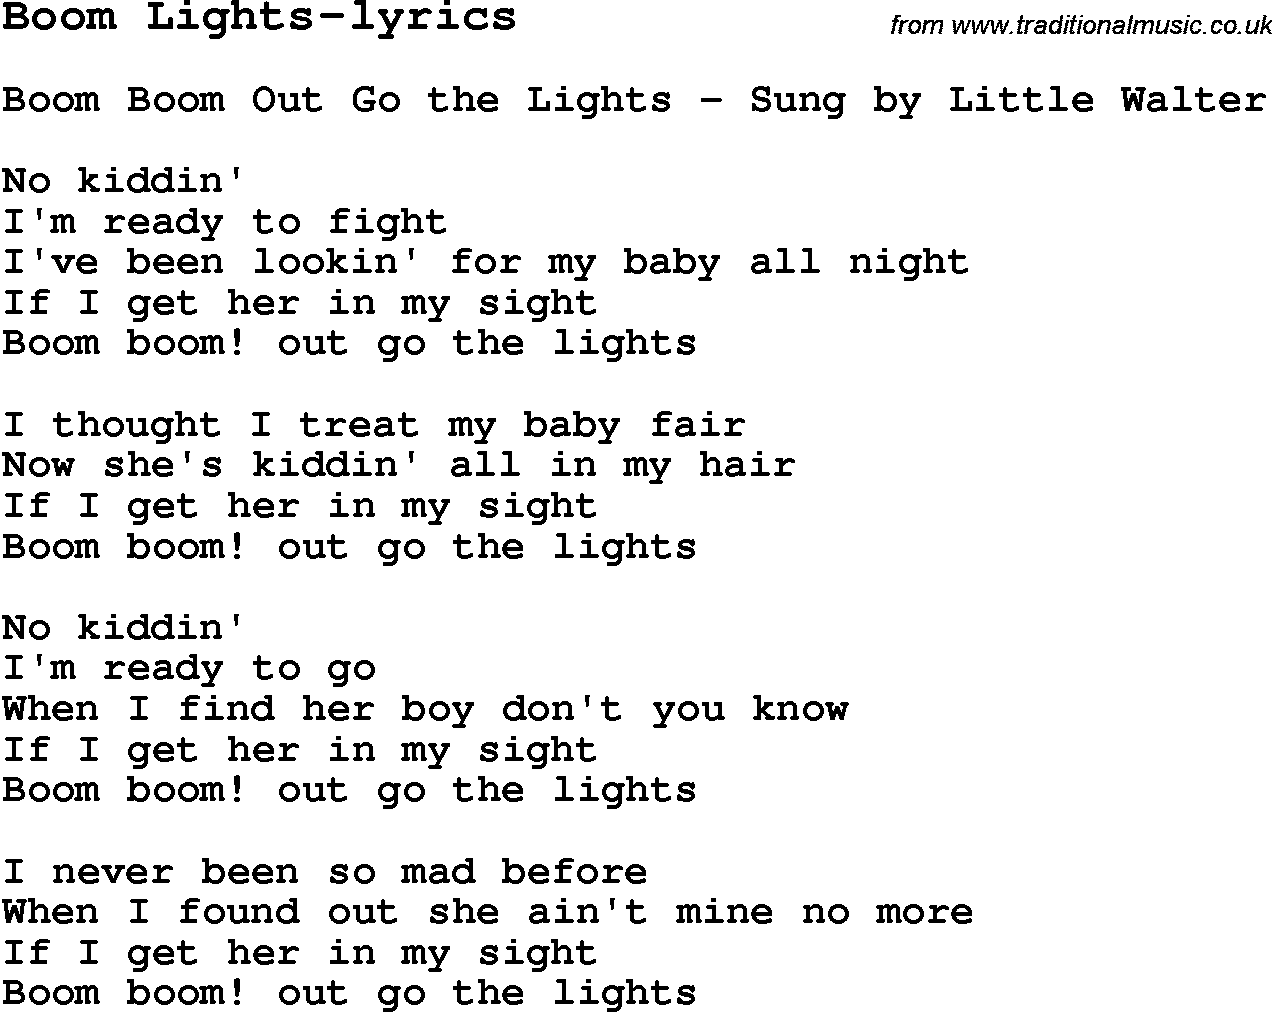 Blues Guitar Song, lyrics, chords, tablature, playing hints for Boom Lights-lyrics